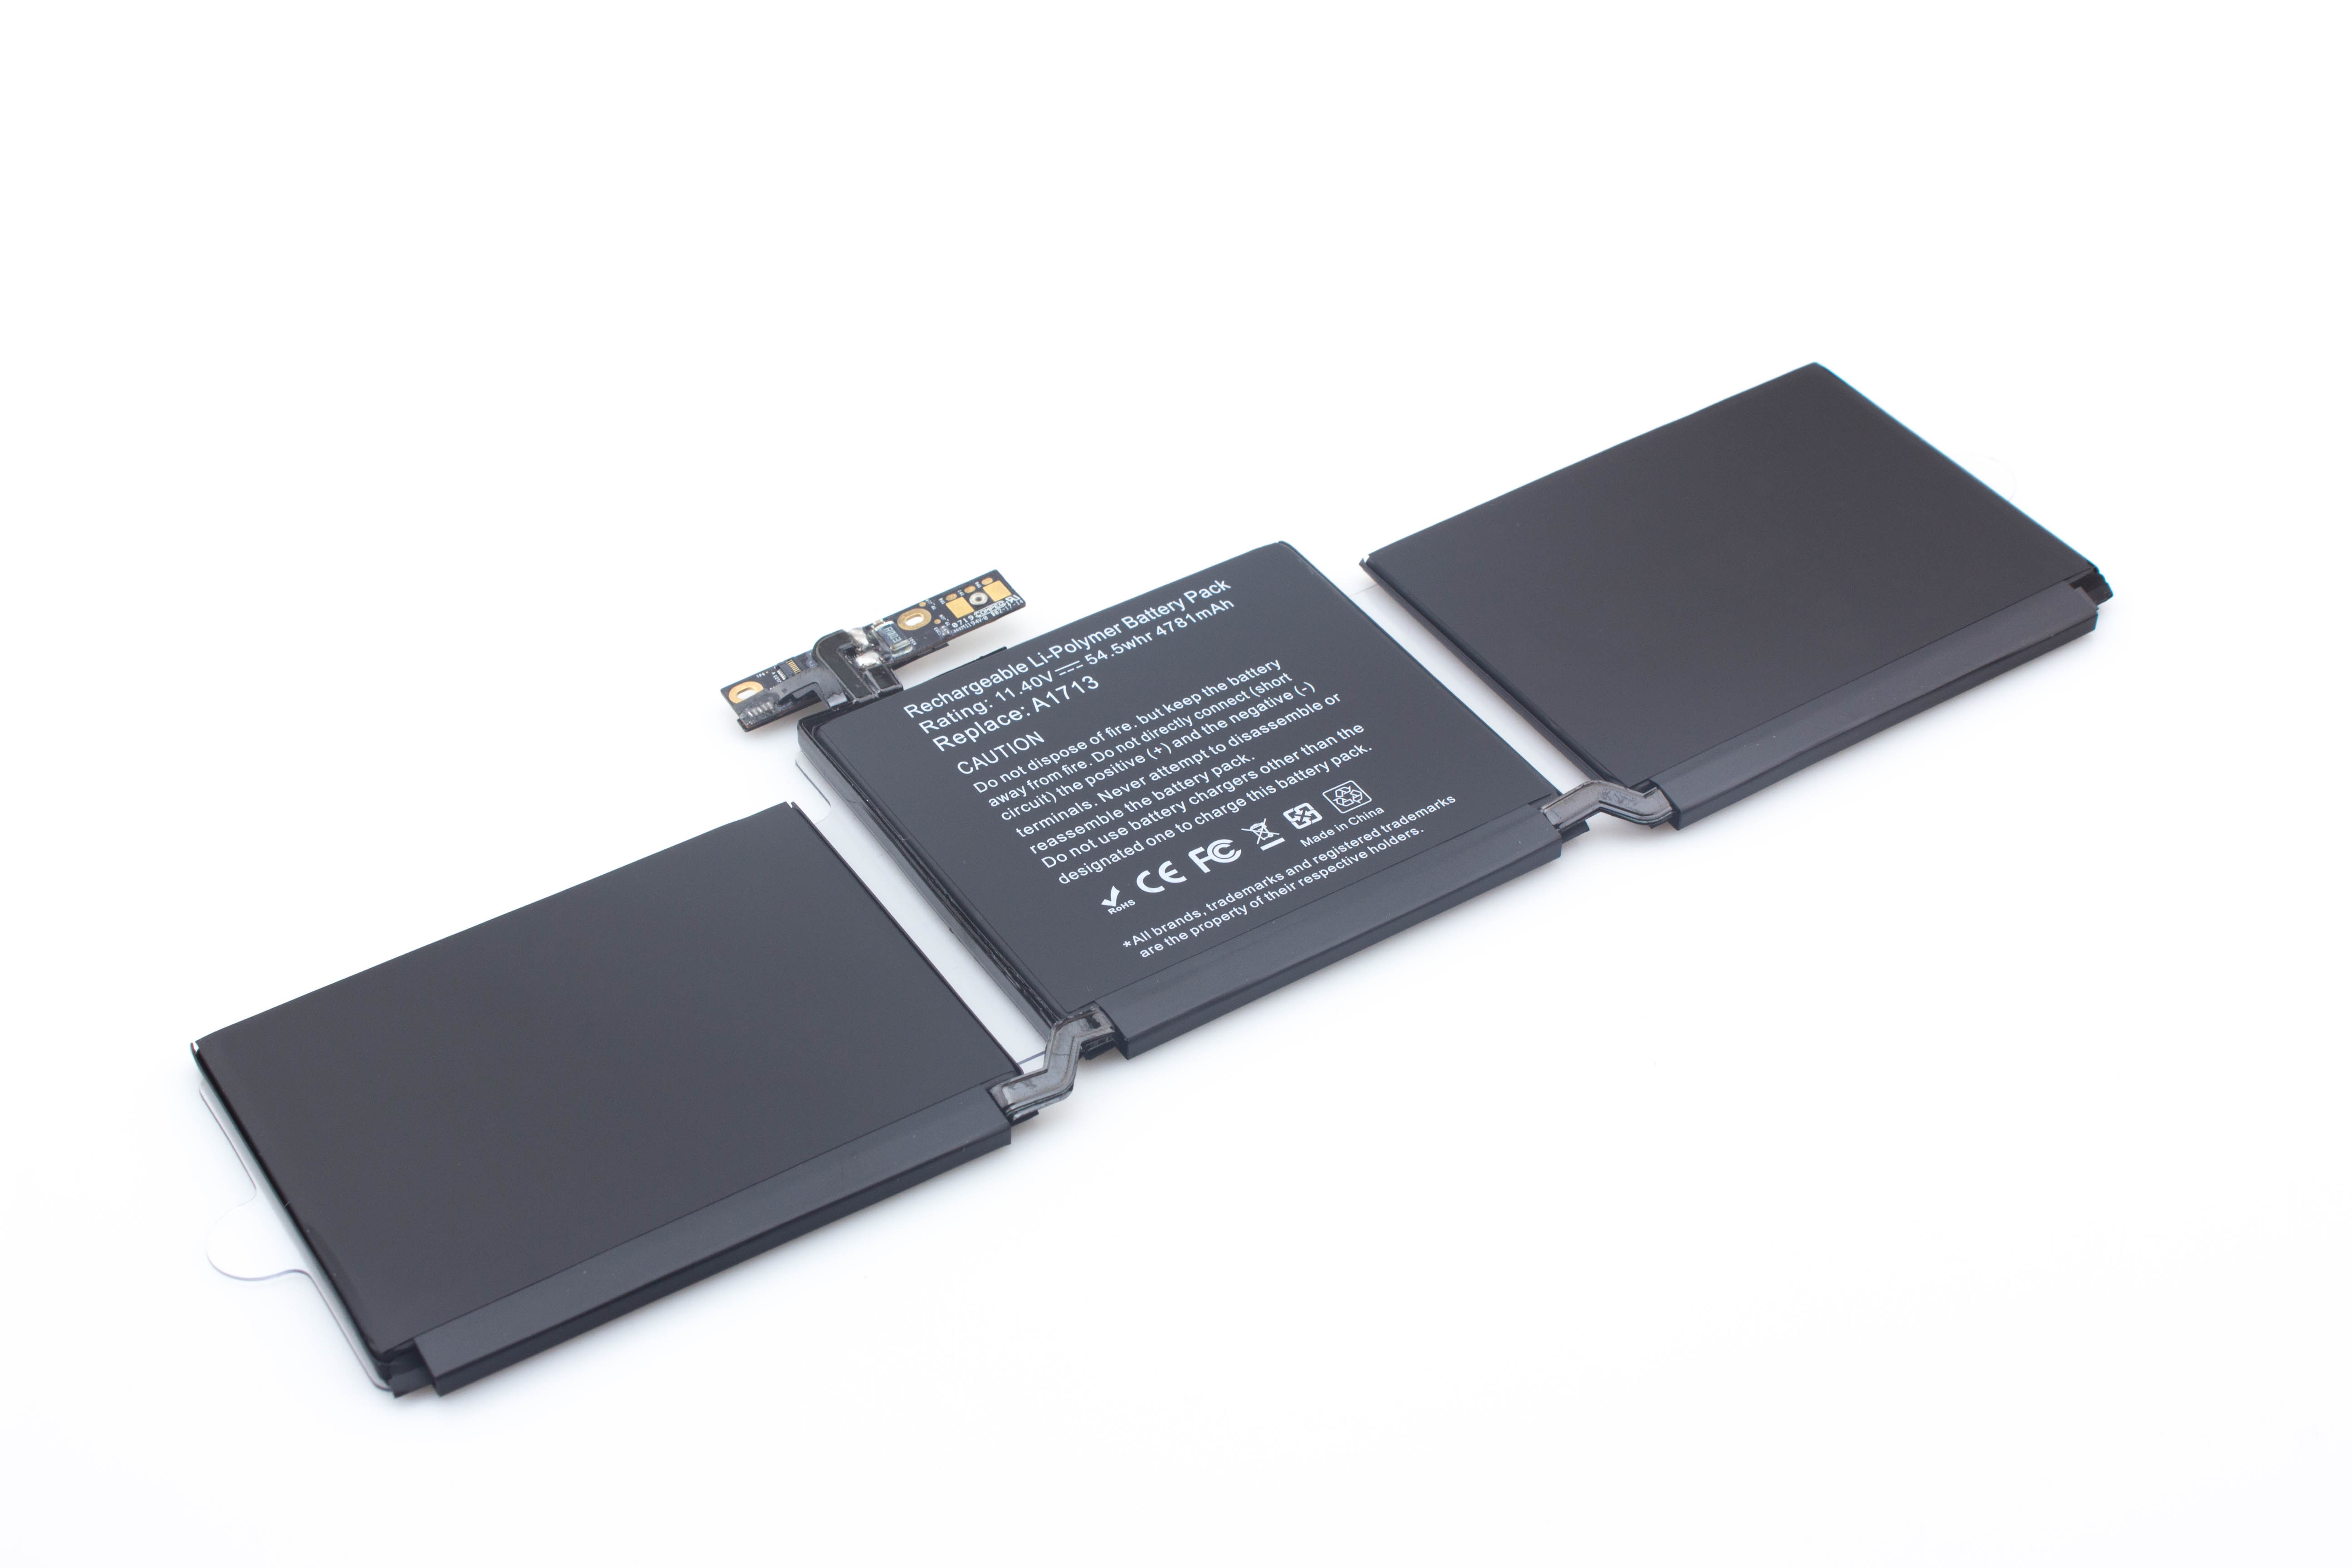 Best Seller OEM Manufacturer laptop battery lithium ion batteries A1713 for the Apple MacBook Pro A1708 model black series